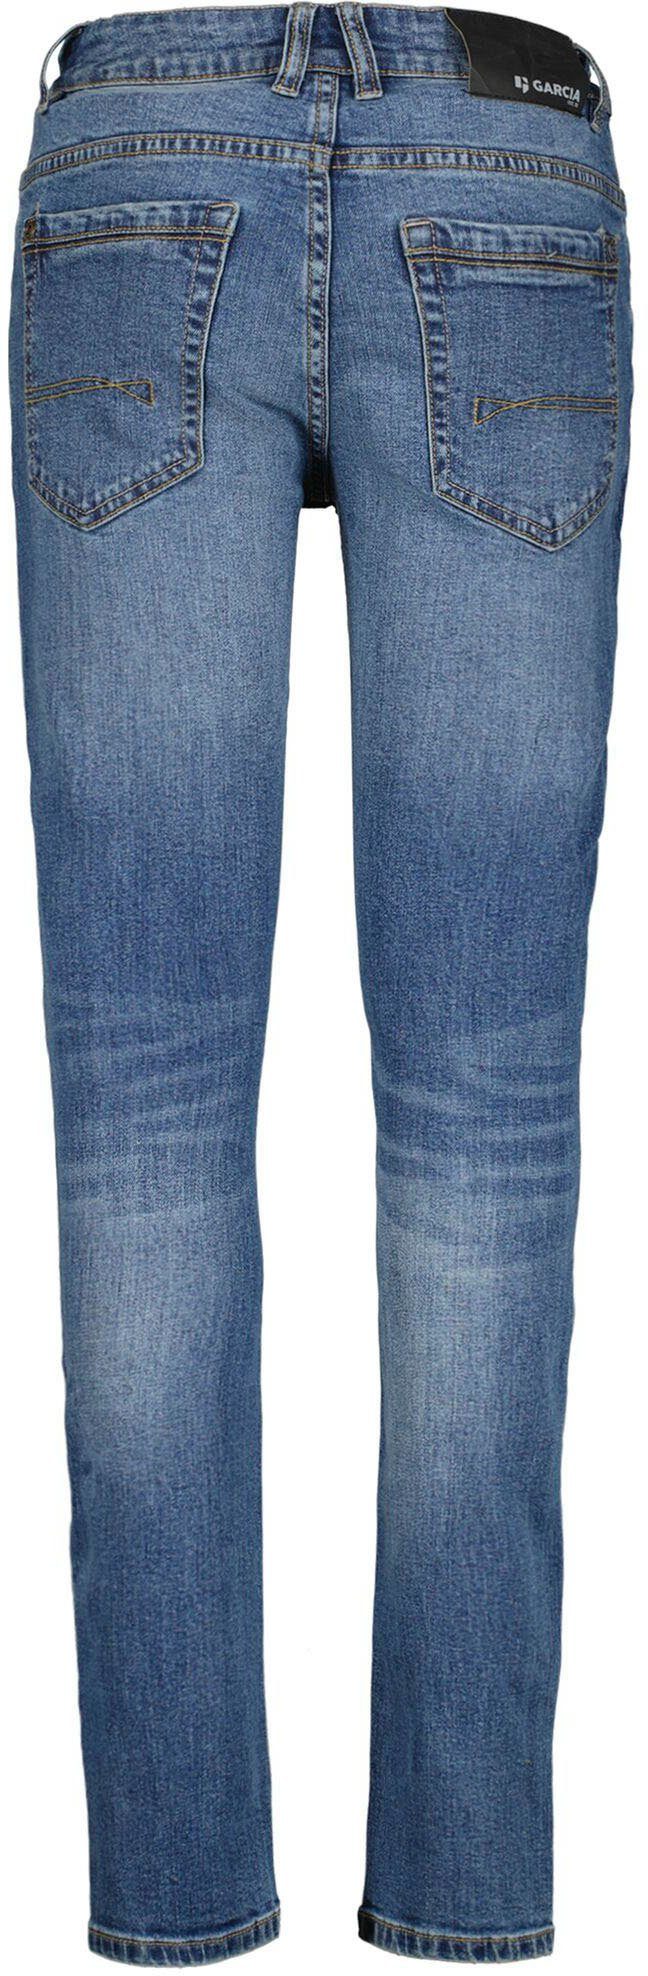 Garcia 5-Pocket-Jeans Lazlo mit Destroyed-Detail light used for am BOYS Knie